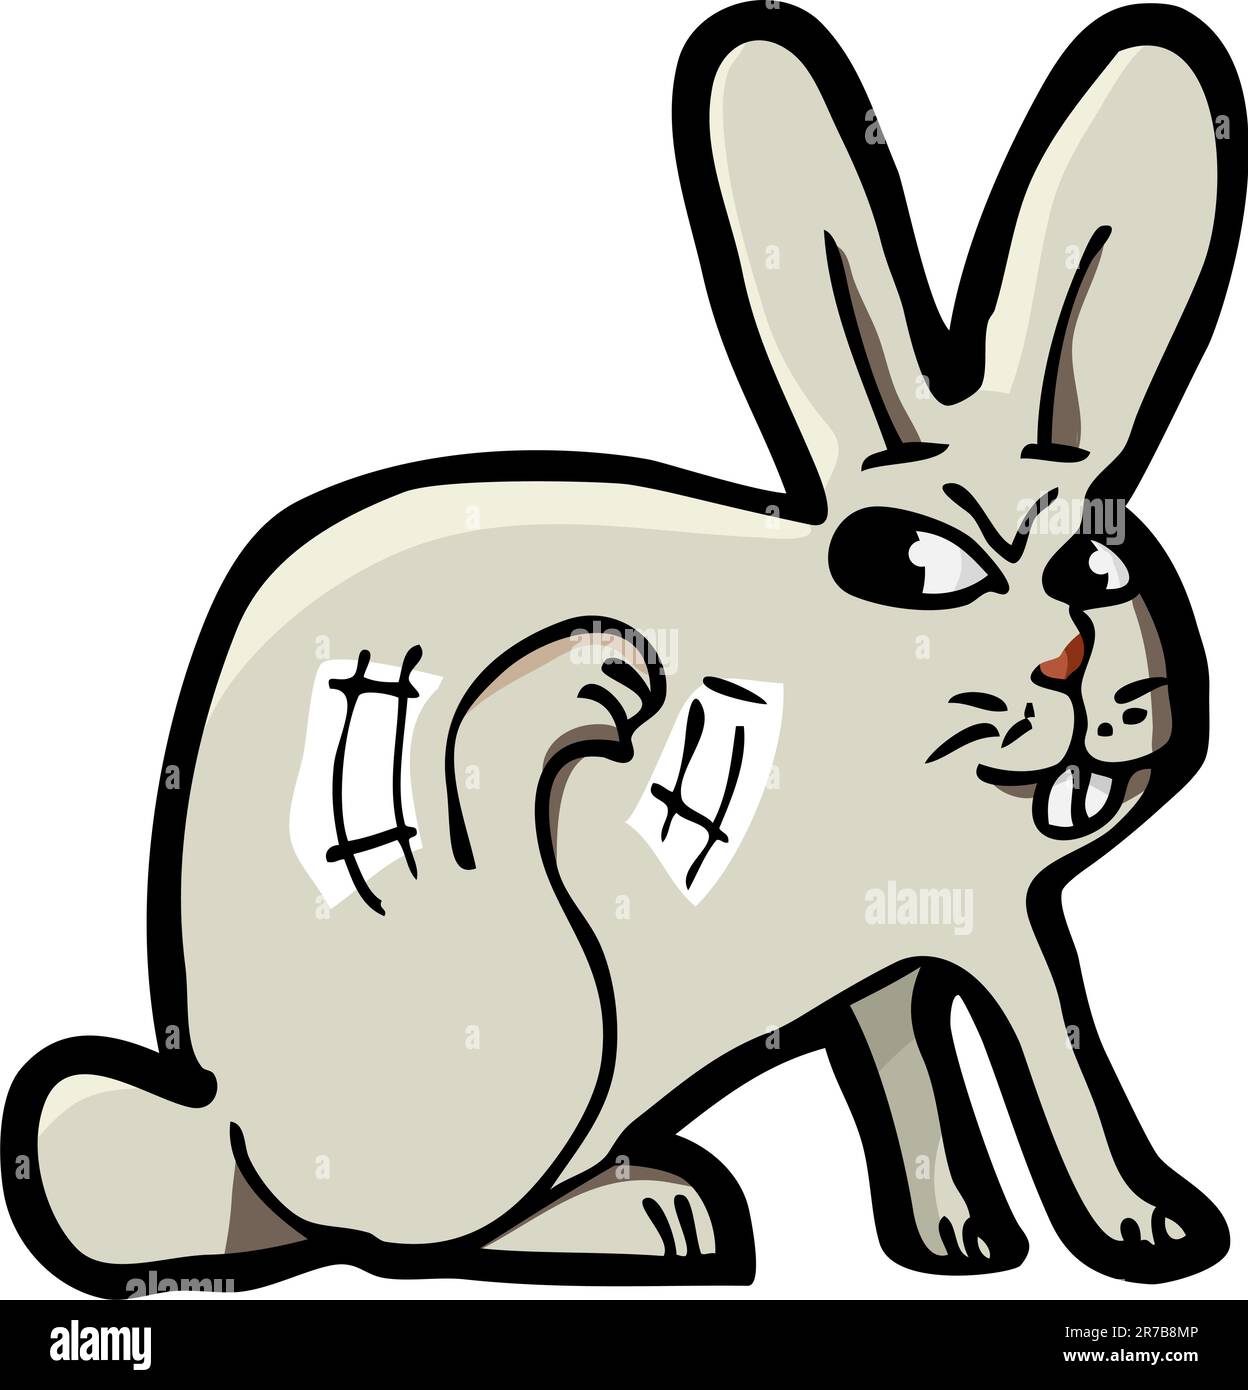 Cartoon of an annoyed gray rabbit scratching himself Stock Vector